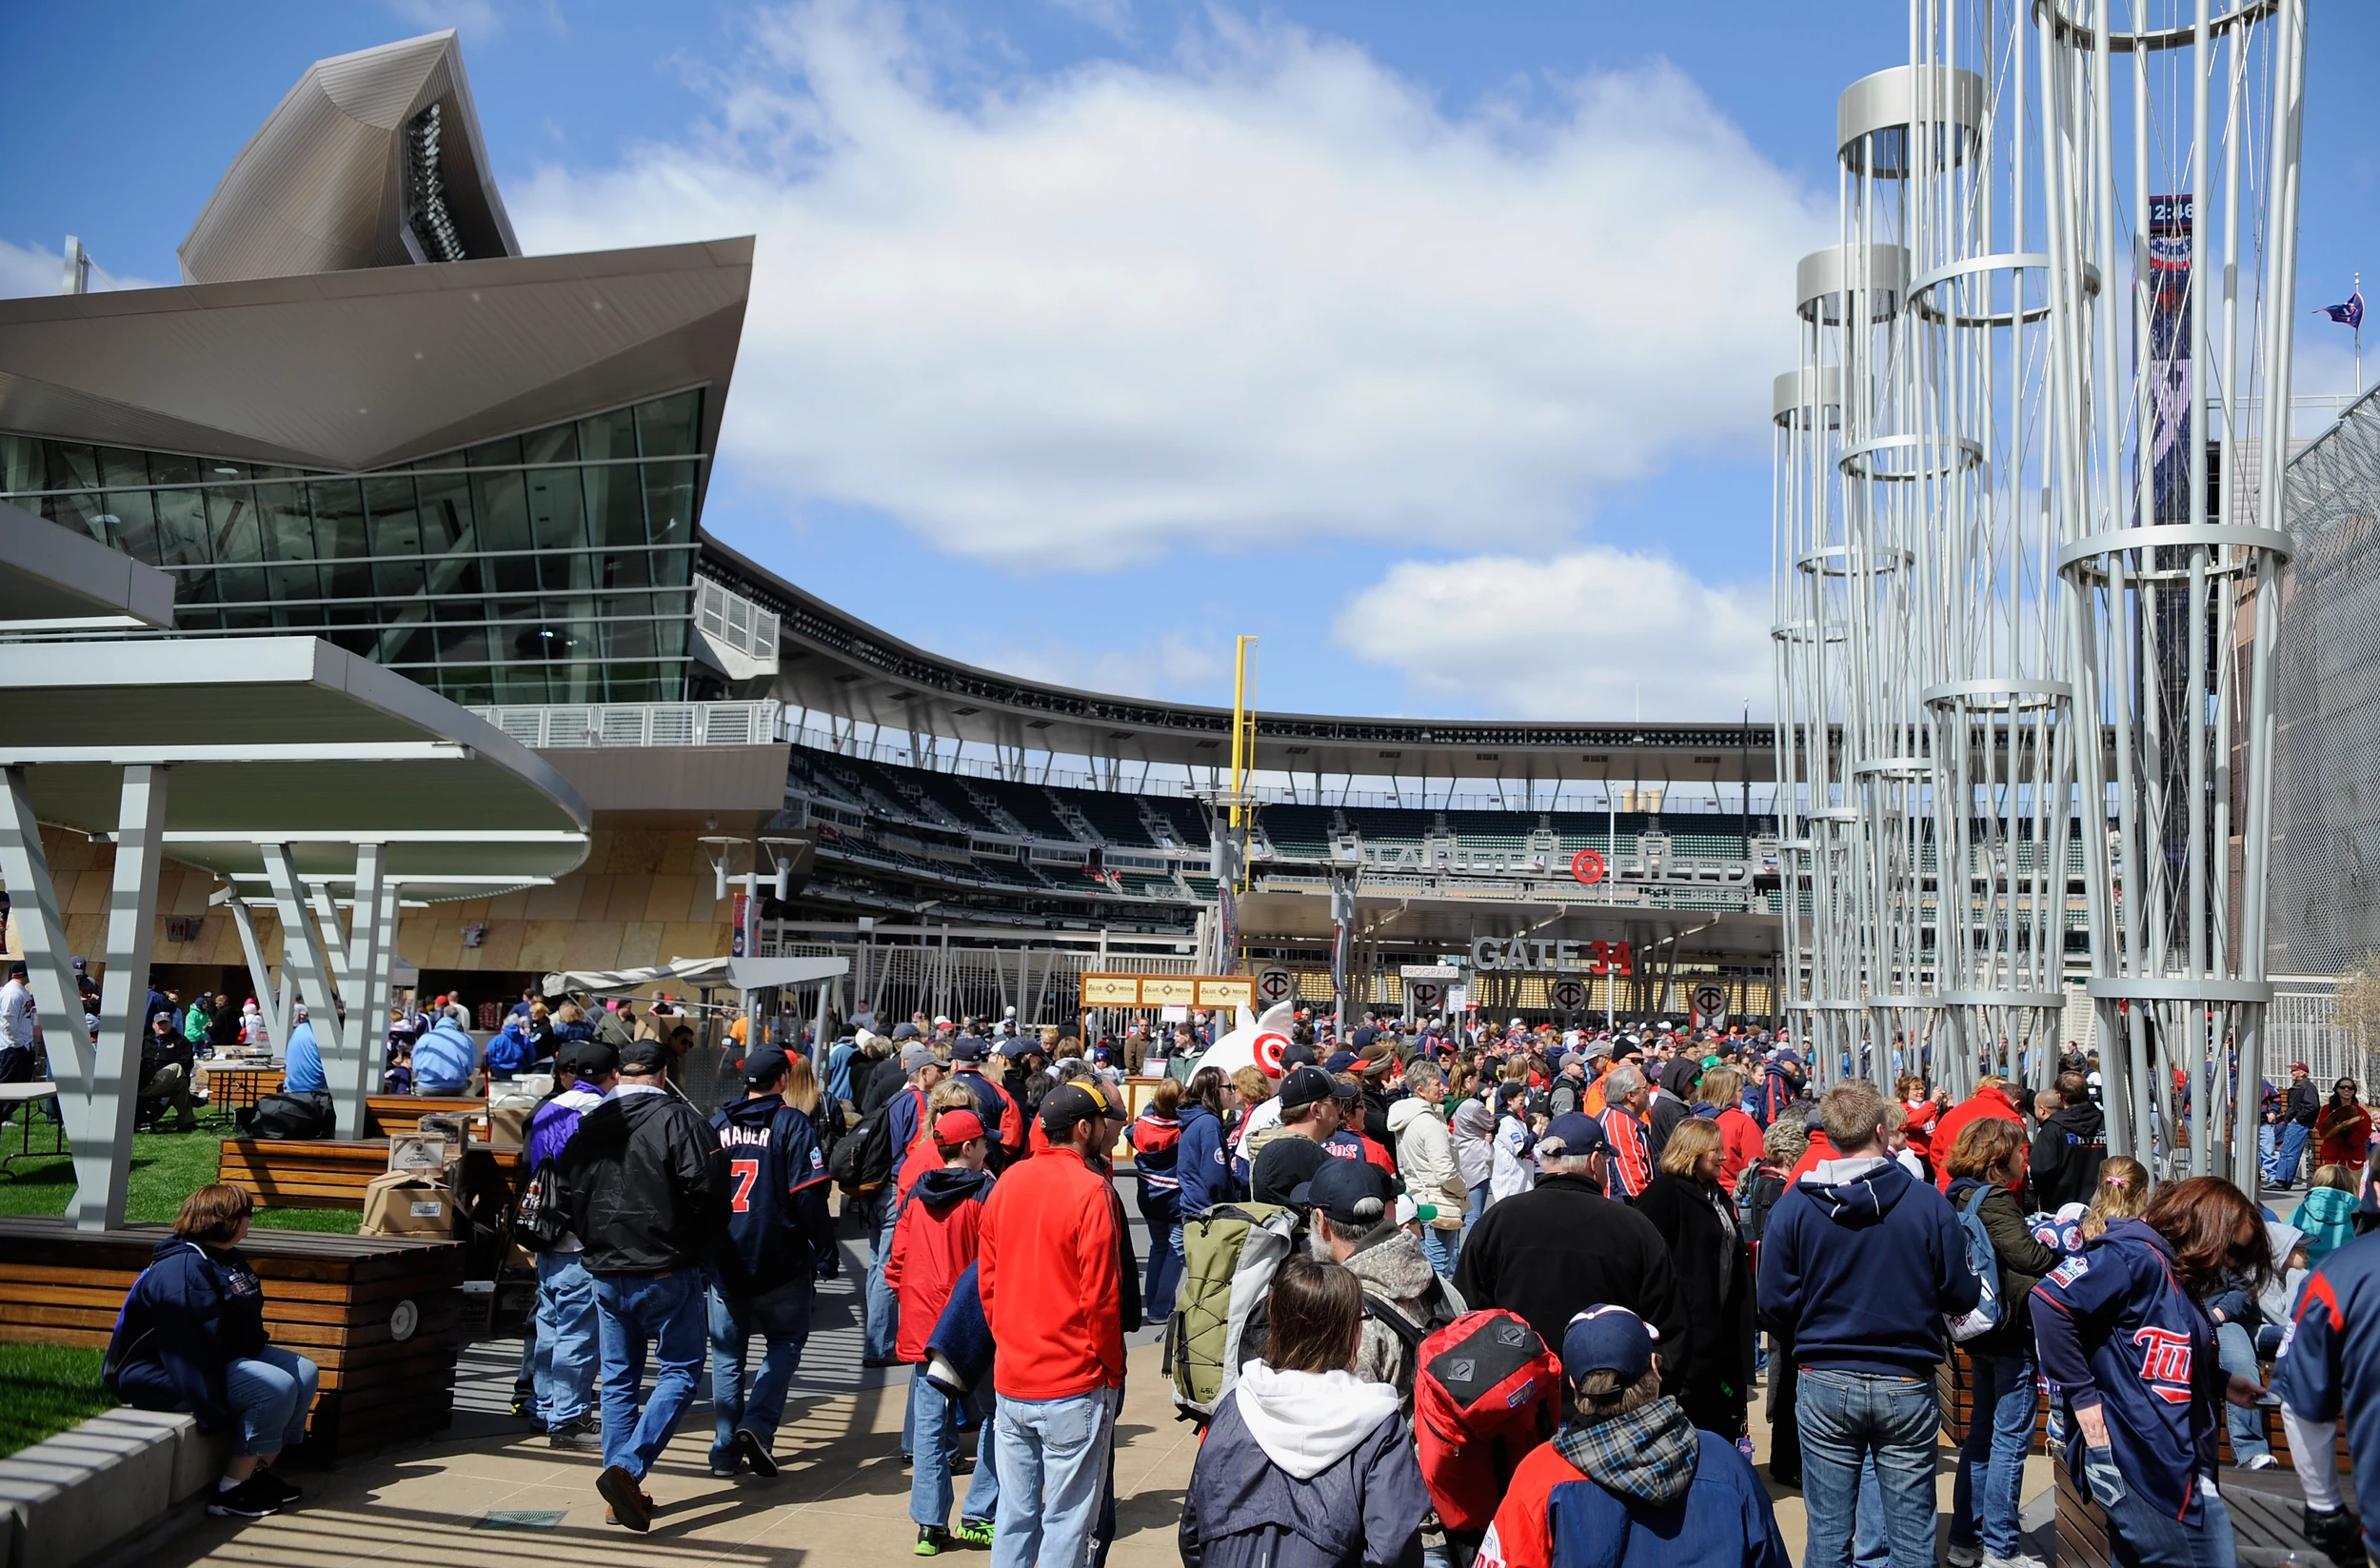 Event in Minnesota – The Minnesota Twins Baseball